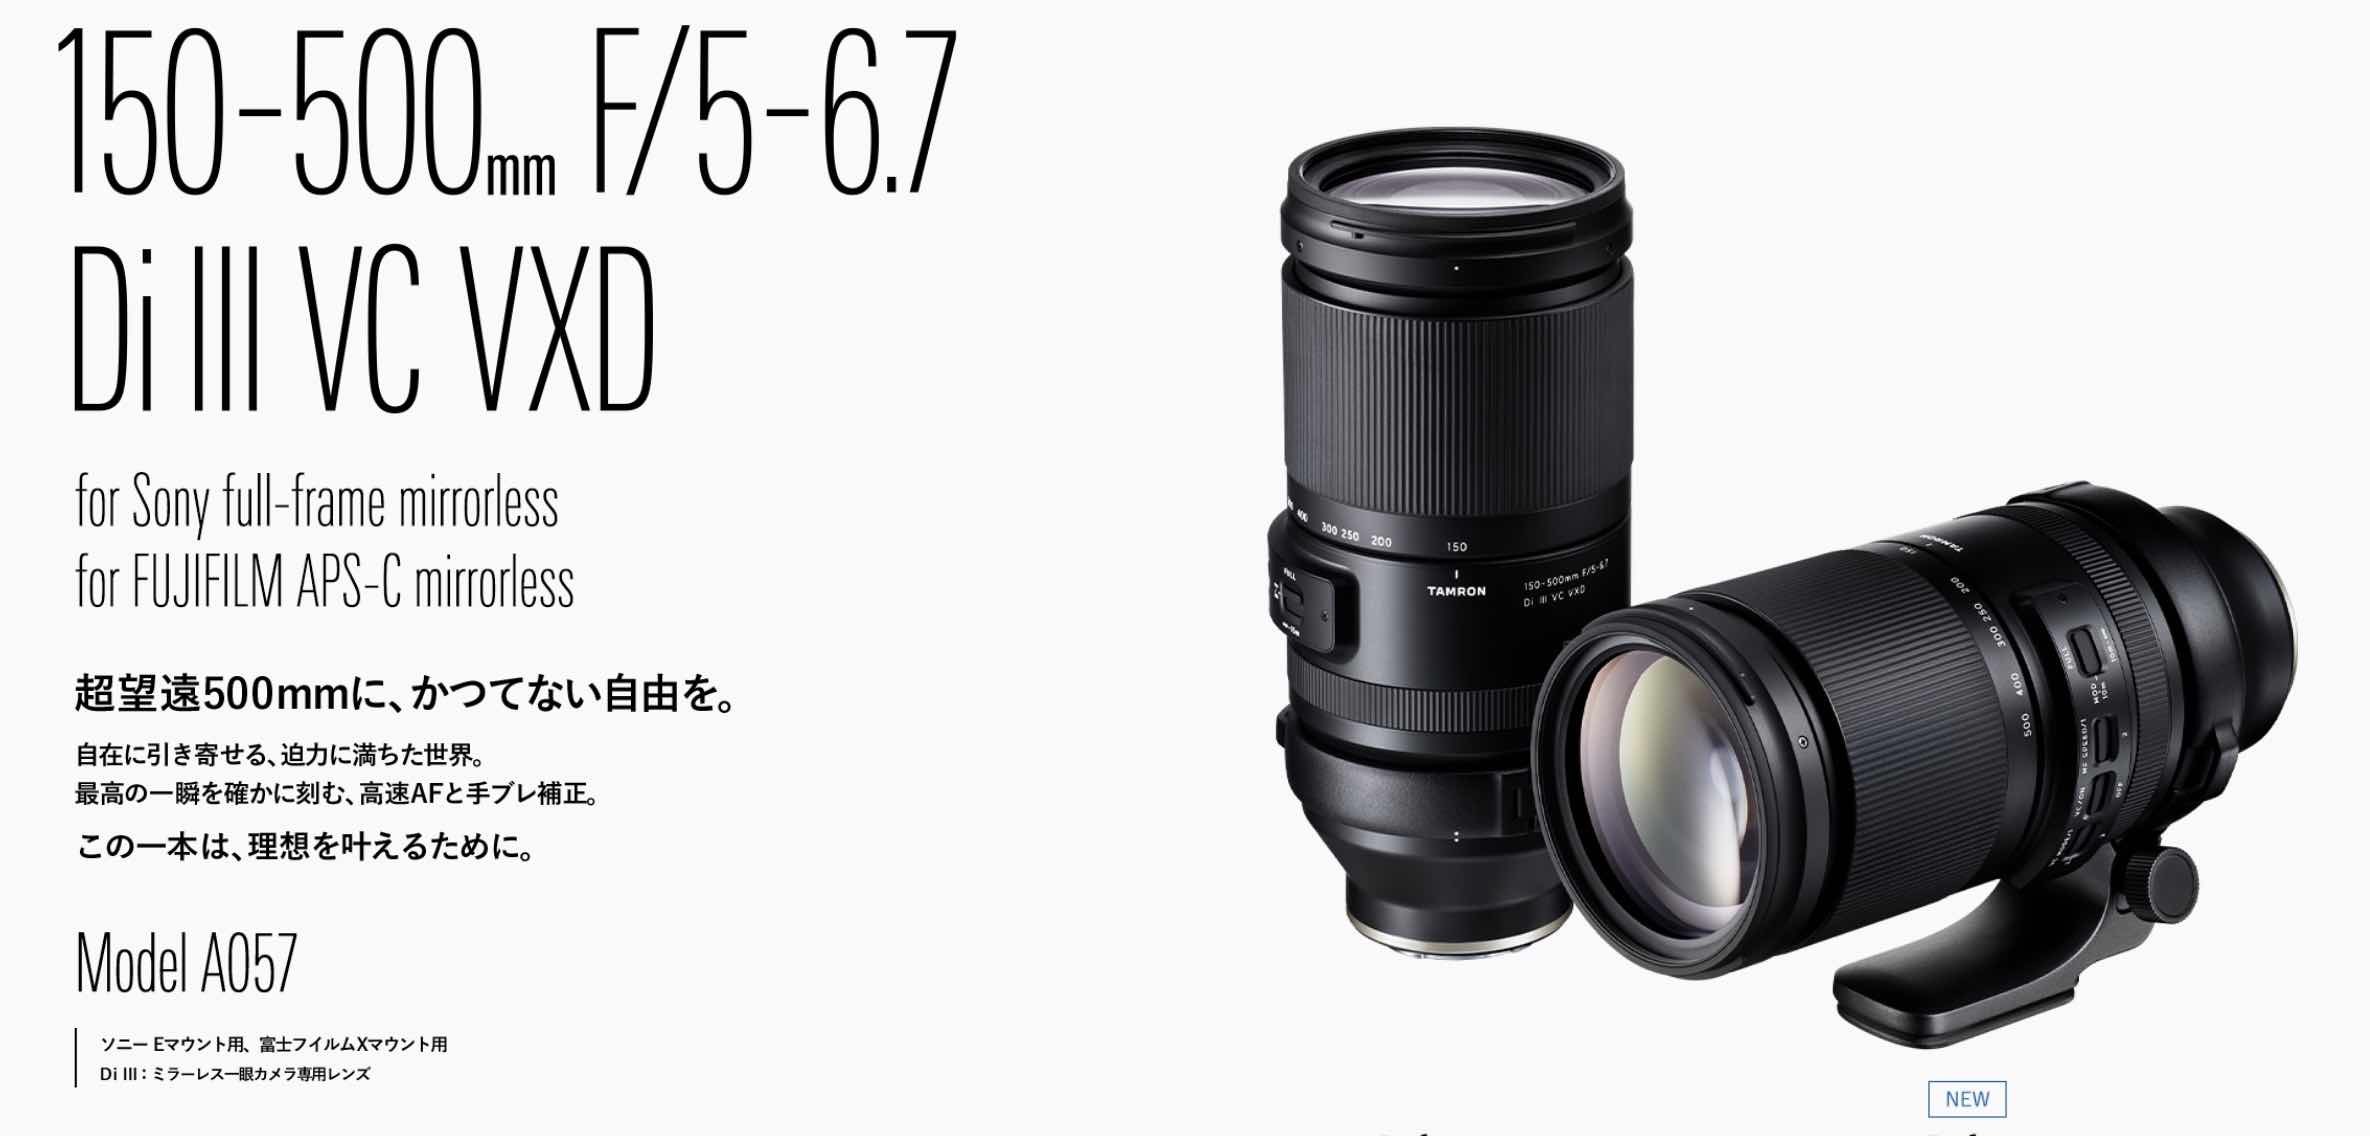 Tamron 150-500mmF5-6.7 for Fujifilm X Officially Announced - Fuji 